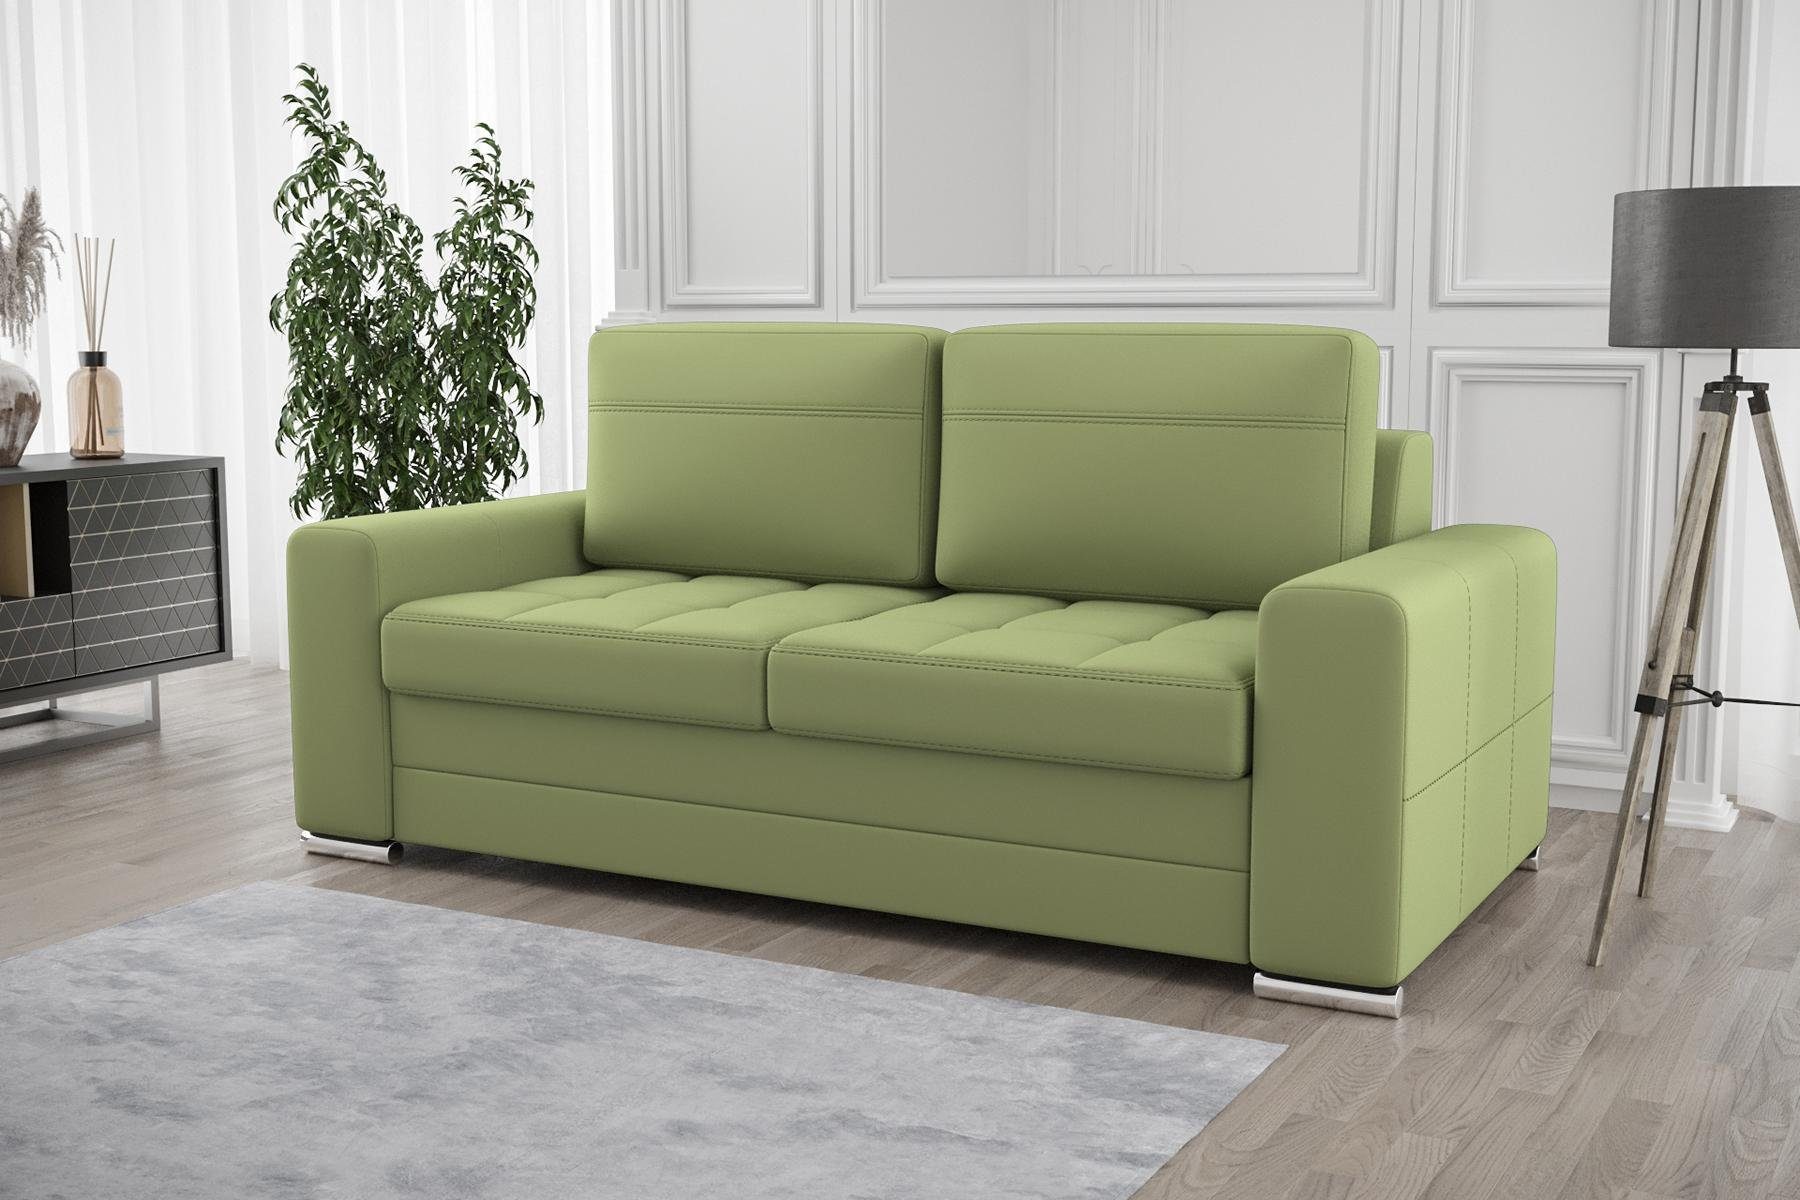 JVmoebel Sofa Design Polster Modern 100% Textil Stoff Modern Zweisitzer, Made in Europe Grün